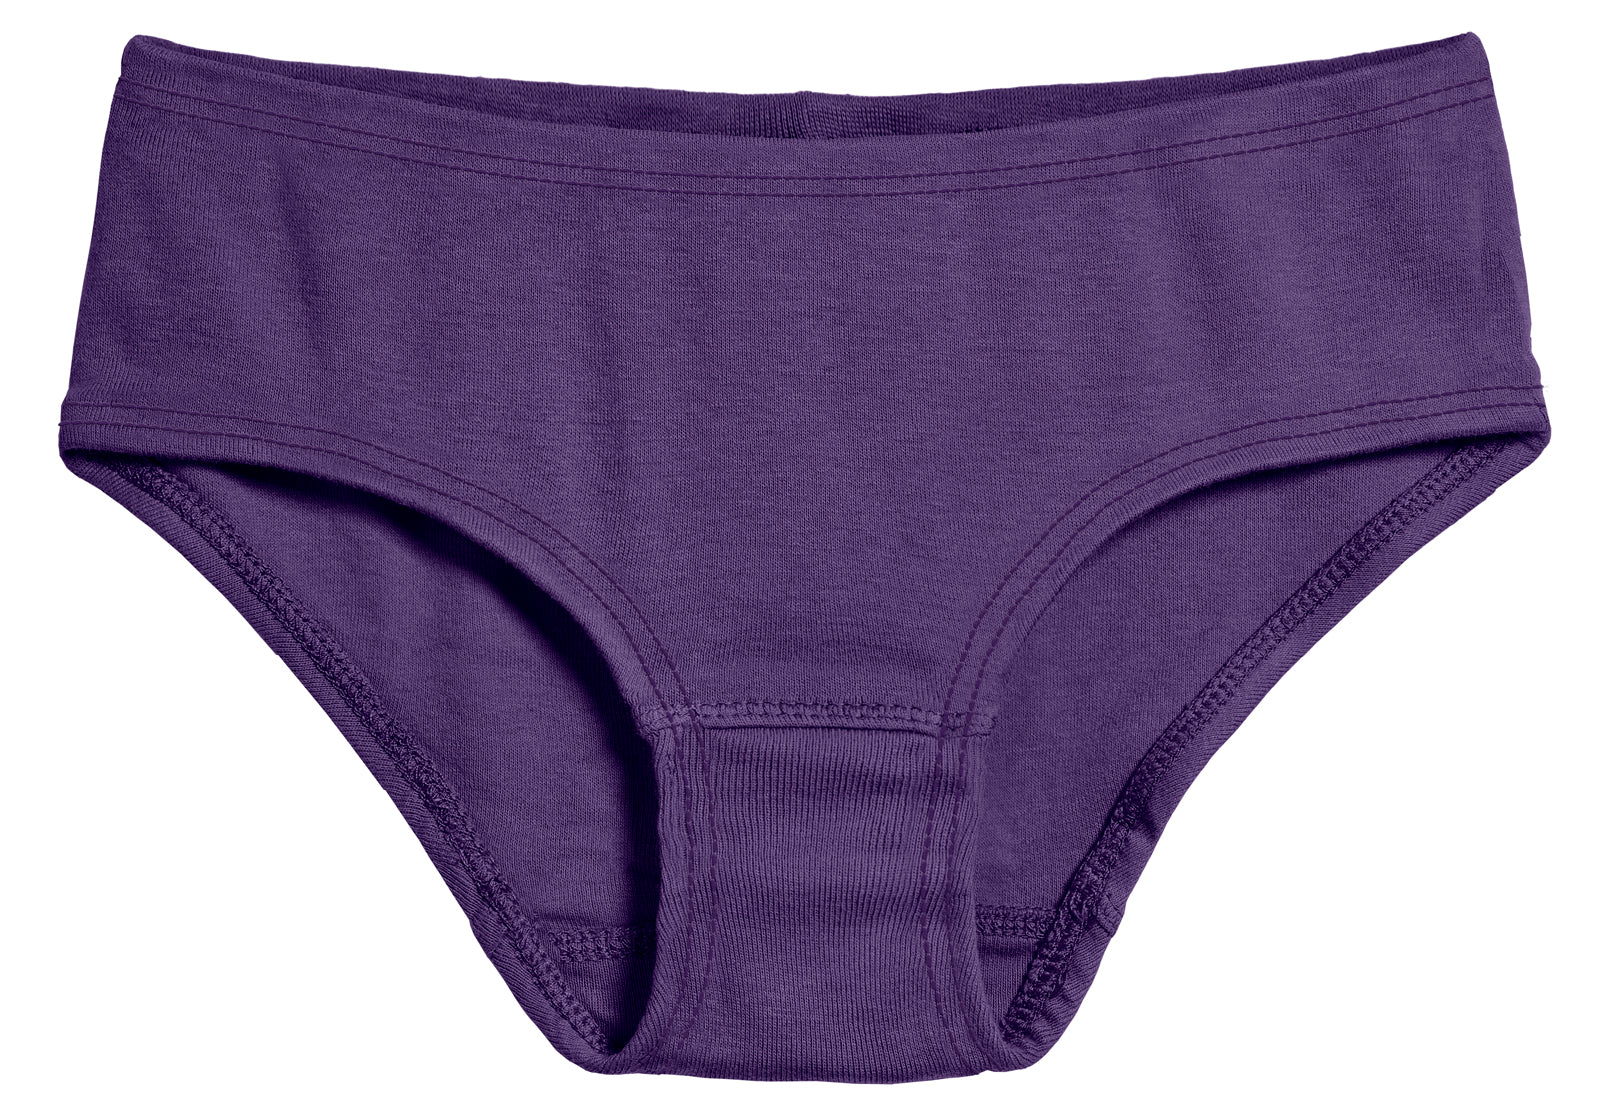 Purple Briefs For Women Online – Buy Purple Briefs Online in India